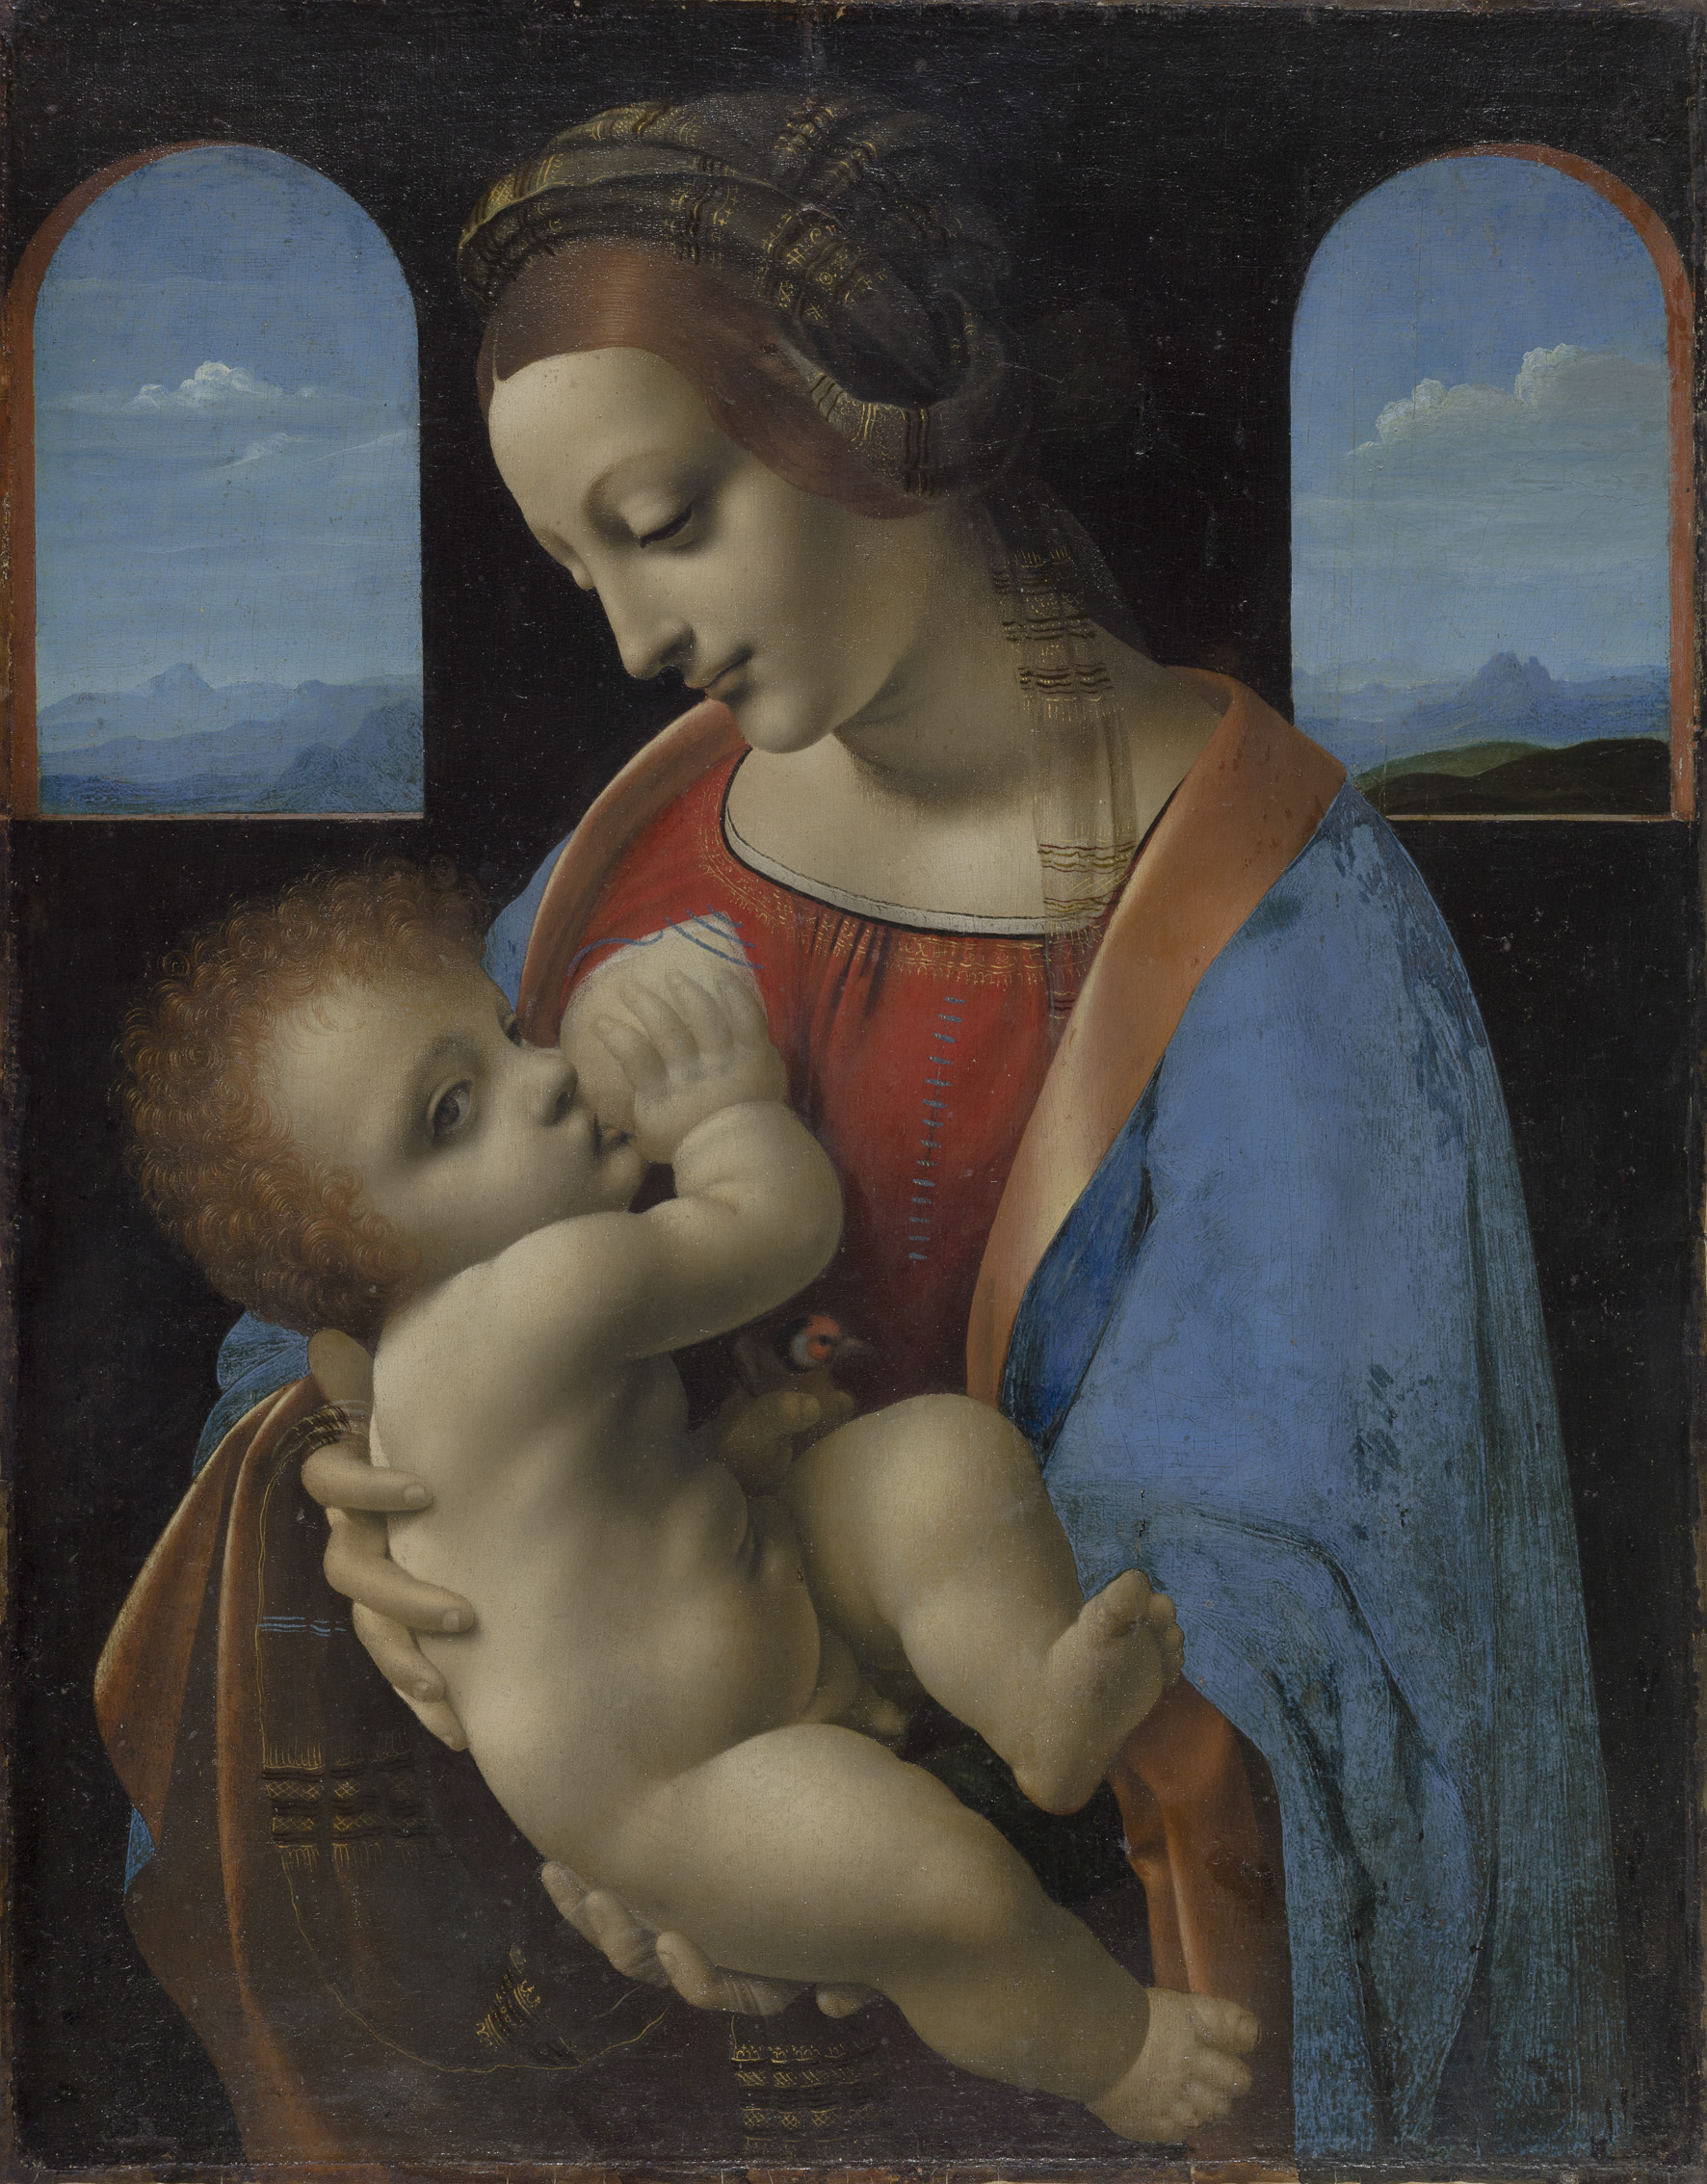 Madonna Litta by Leonardo da Vinci - c. 1490 Museo Poldi Pezzoli